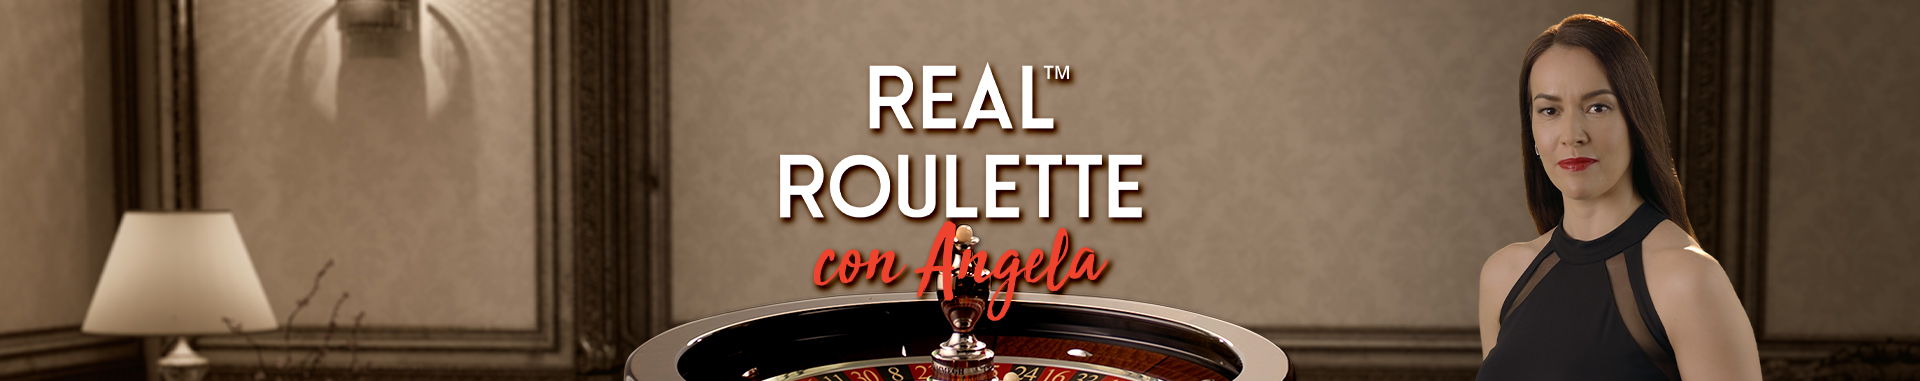 Ruleta Real Roulette con Angela